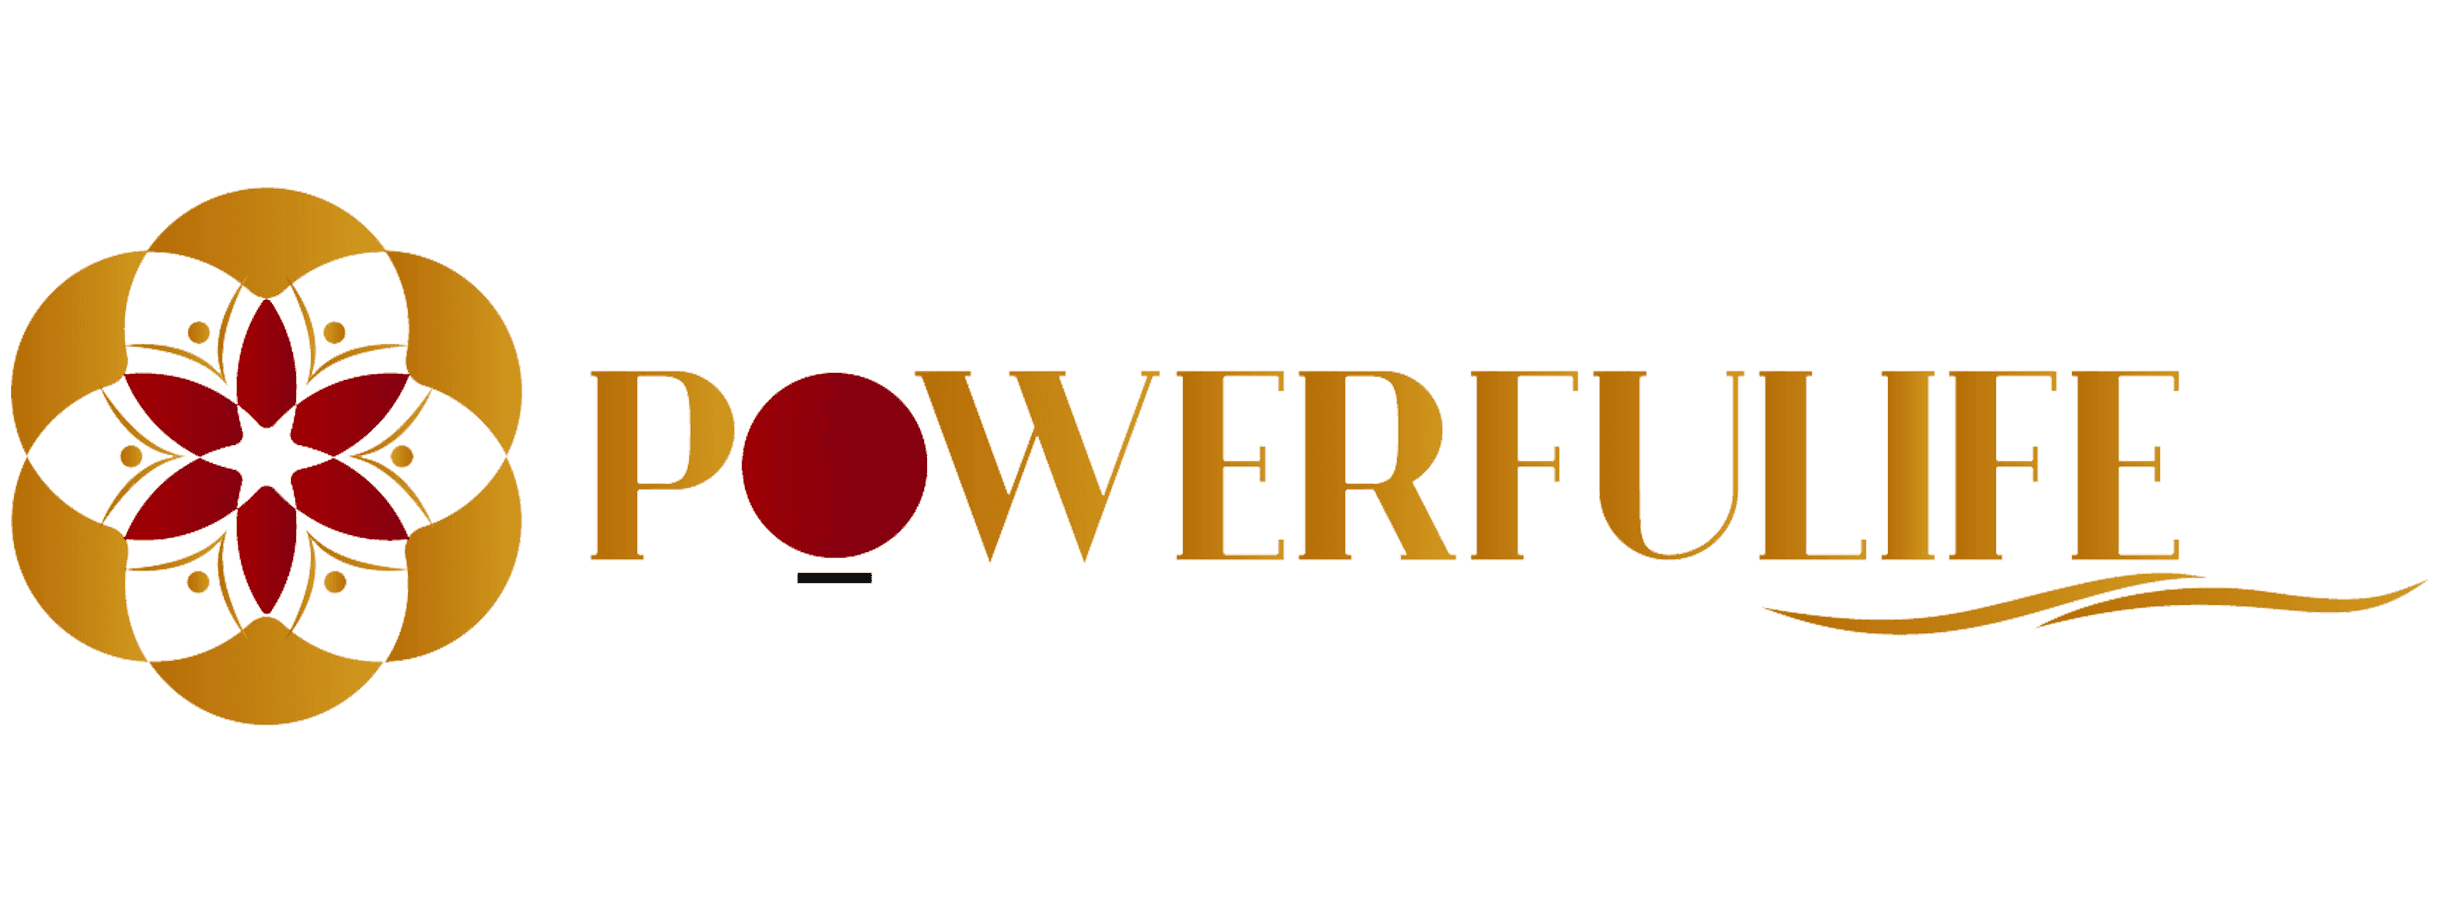 Powerfulife logo